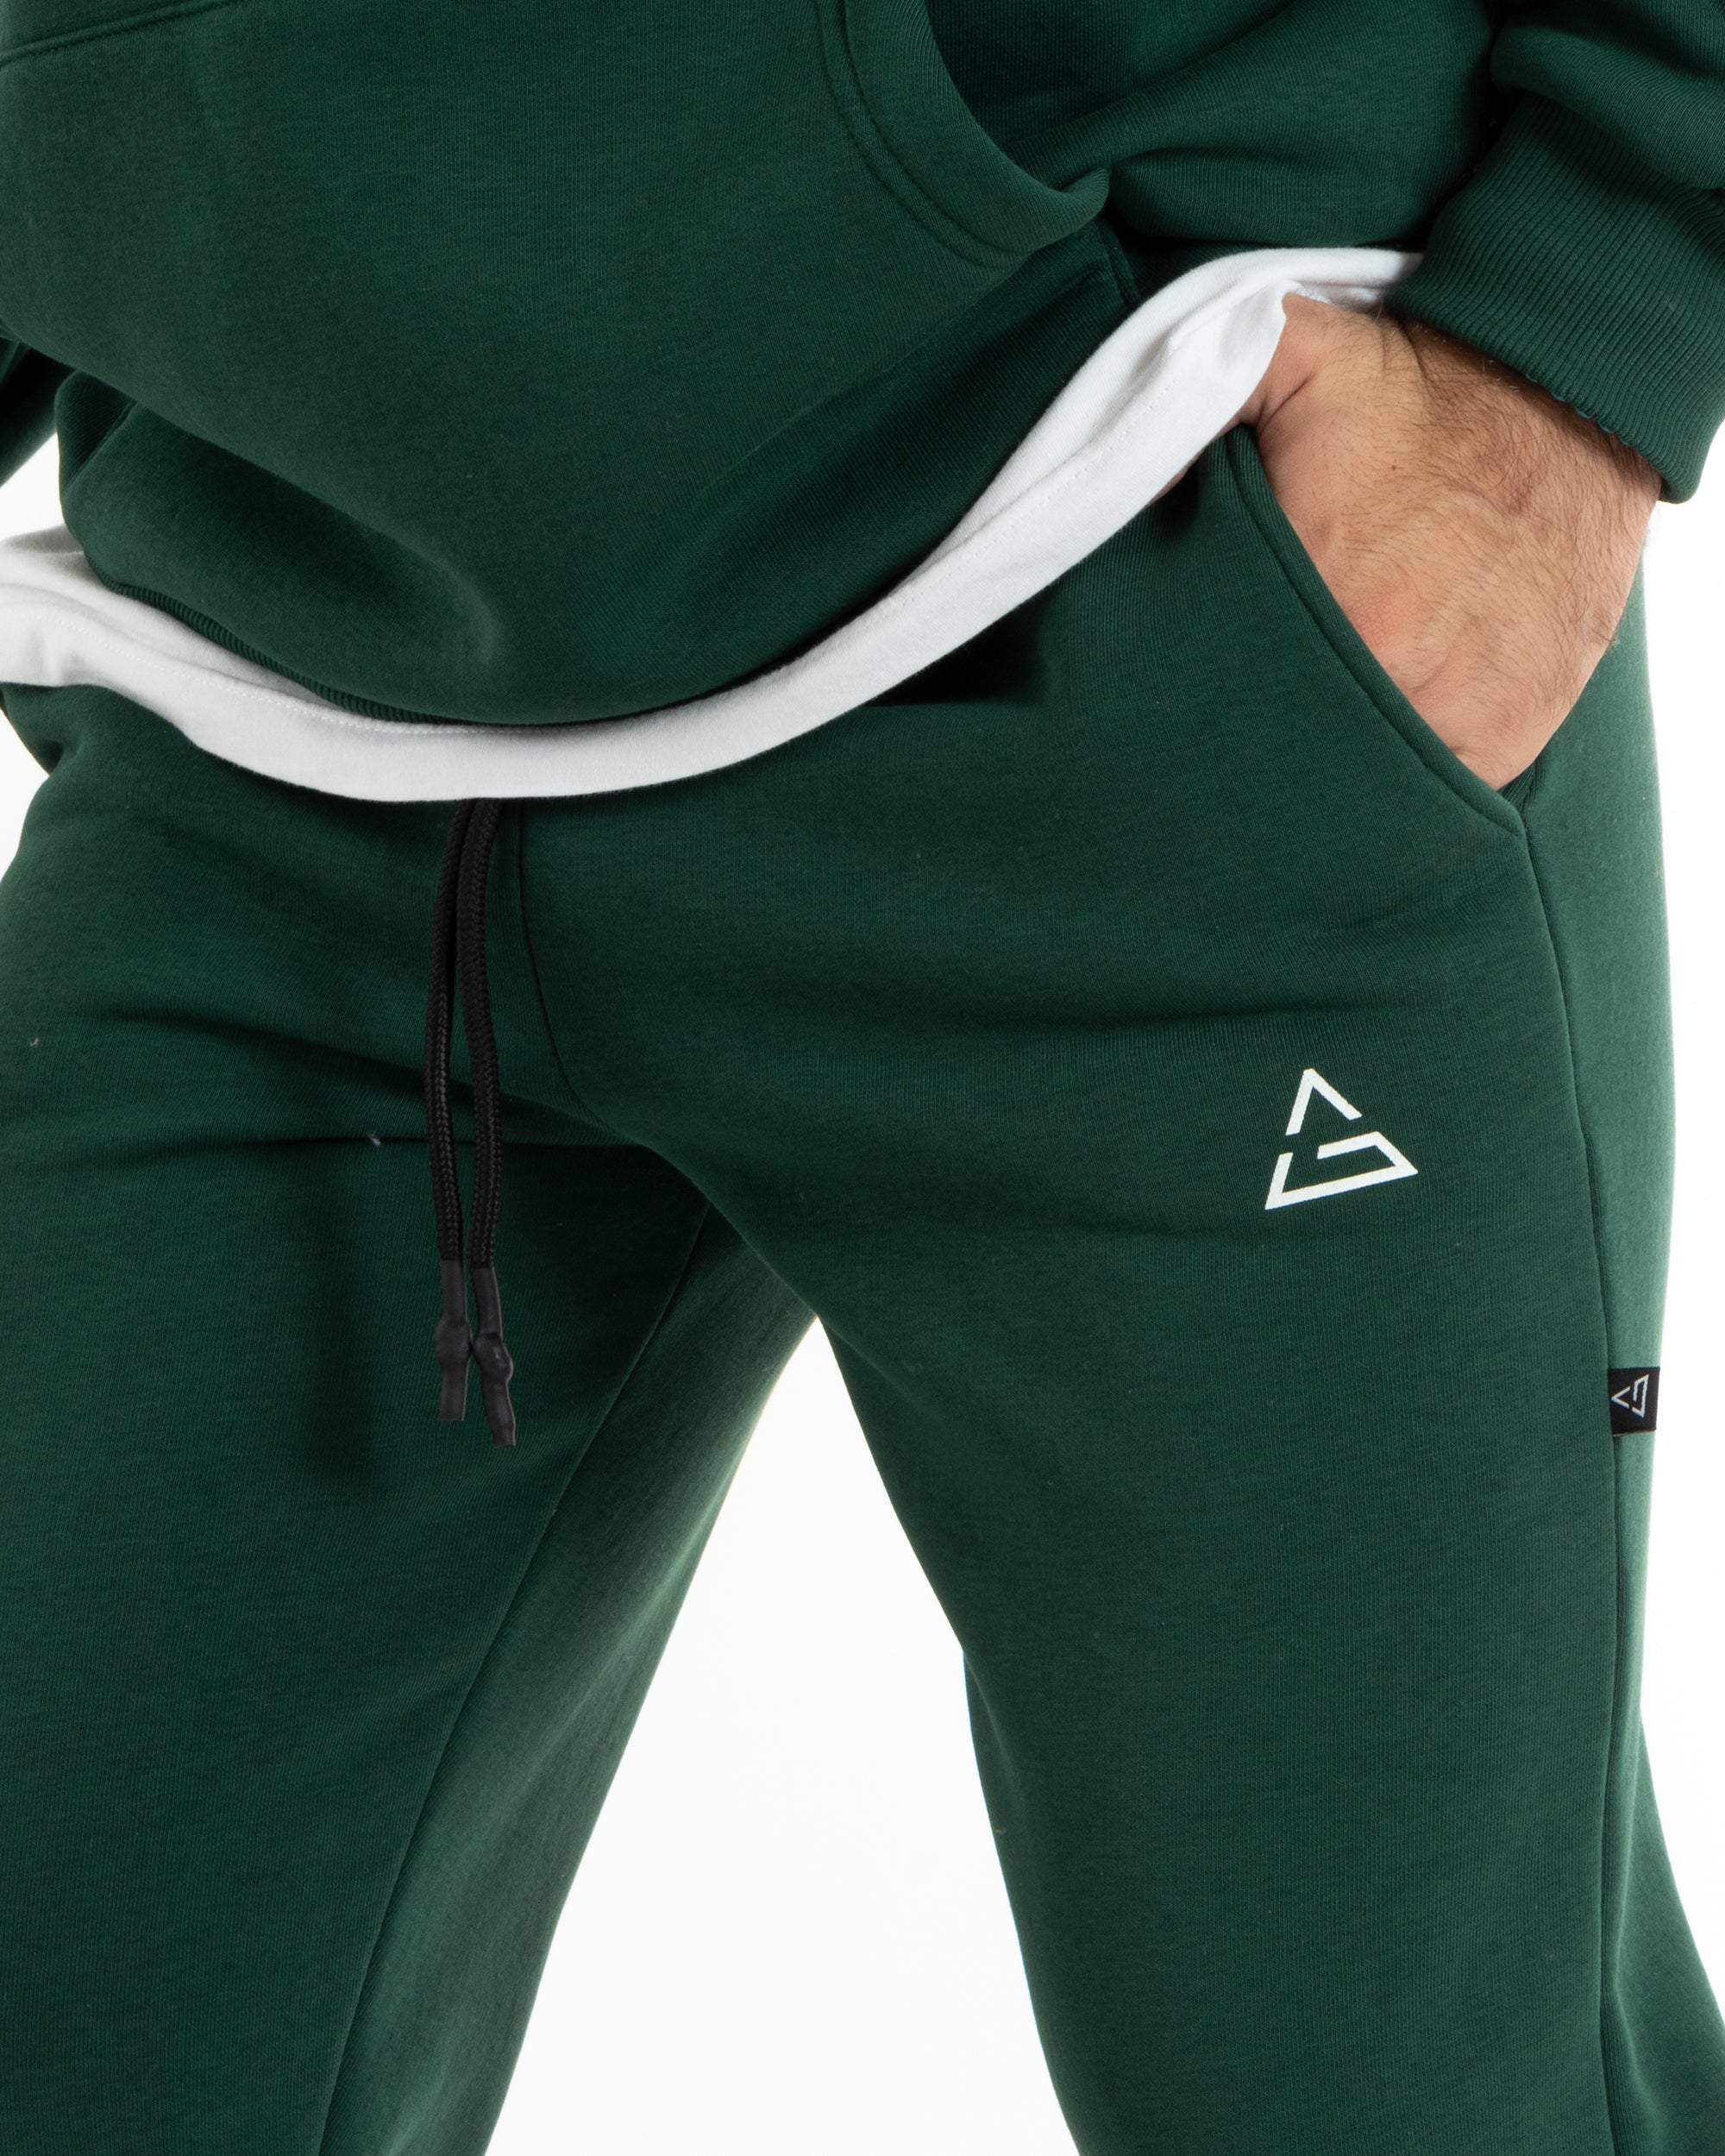 Pantaloni Uomo Pantalaccio Tuta Basic Comodo Caldo Felpato Polycot Verde GIOSAL-P6023A